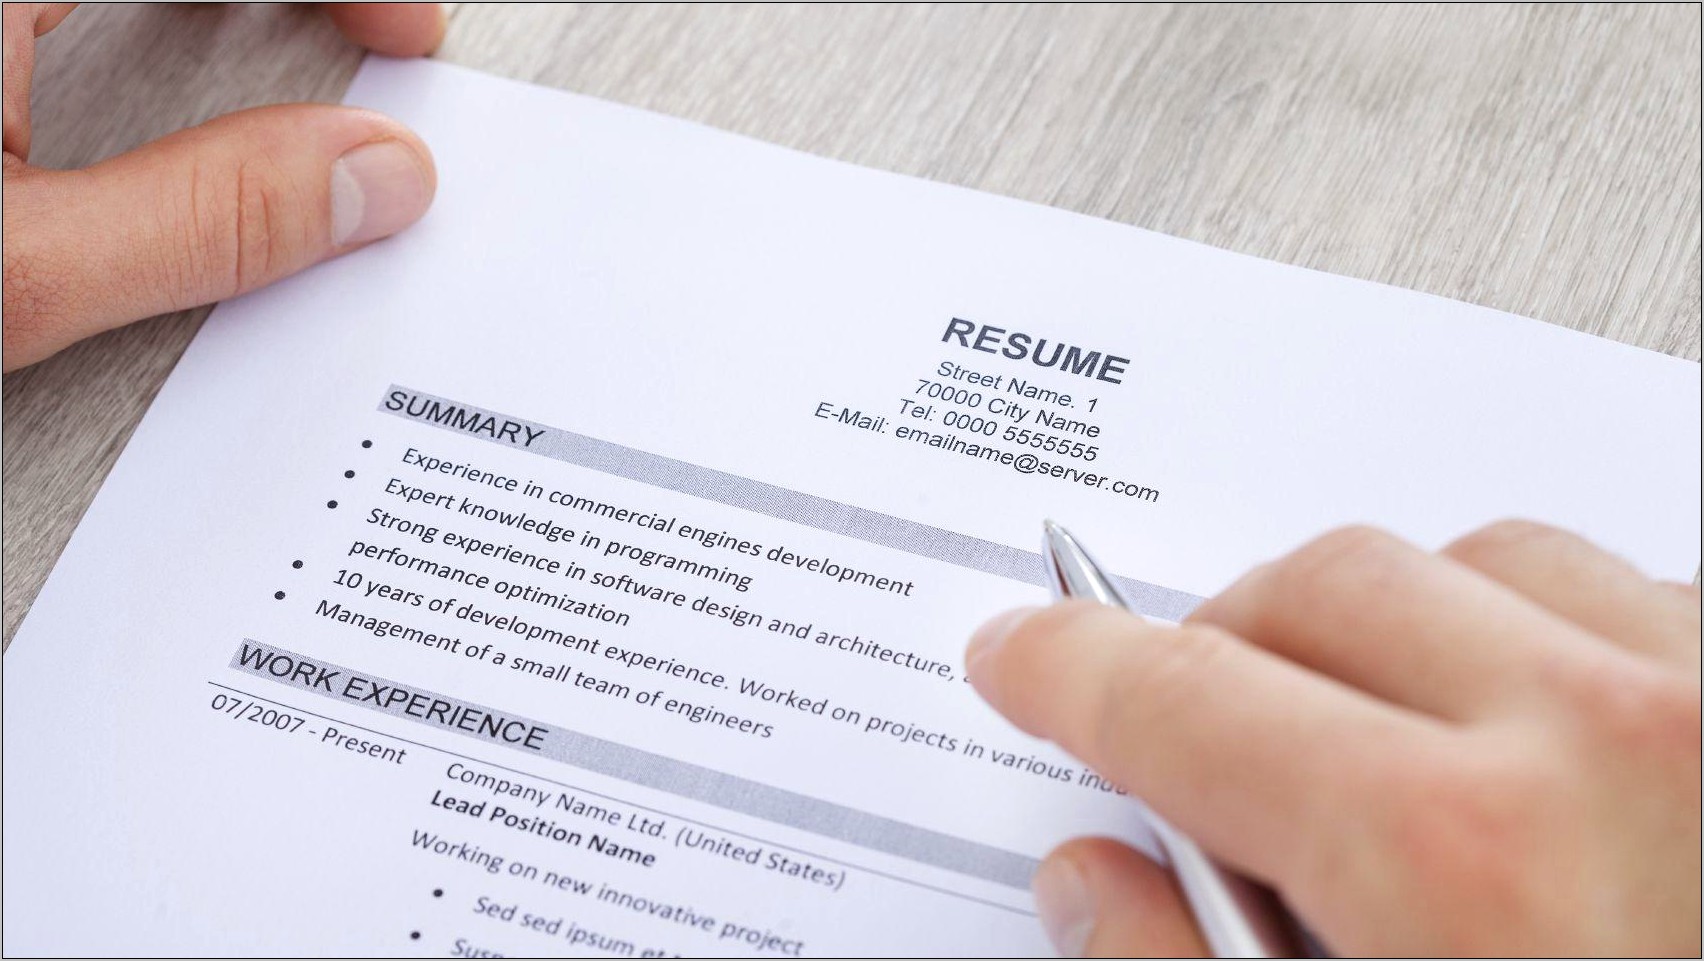 Resume Heading And Summary Examples